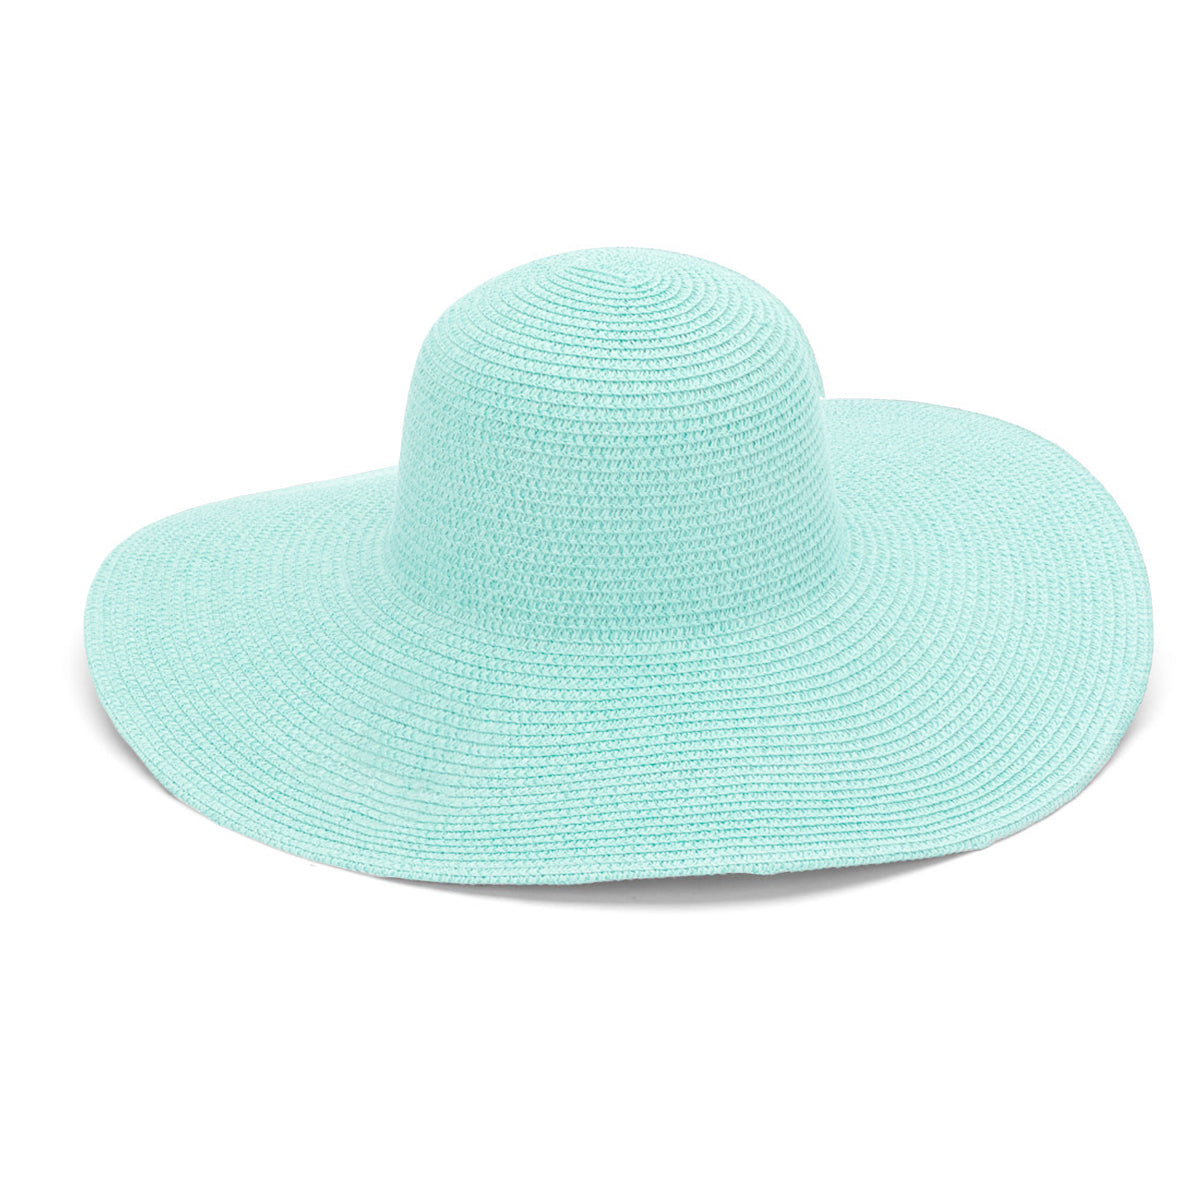 Mint Floppy Sun Hat